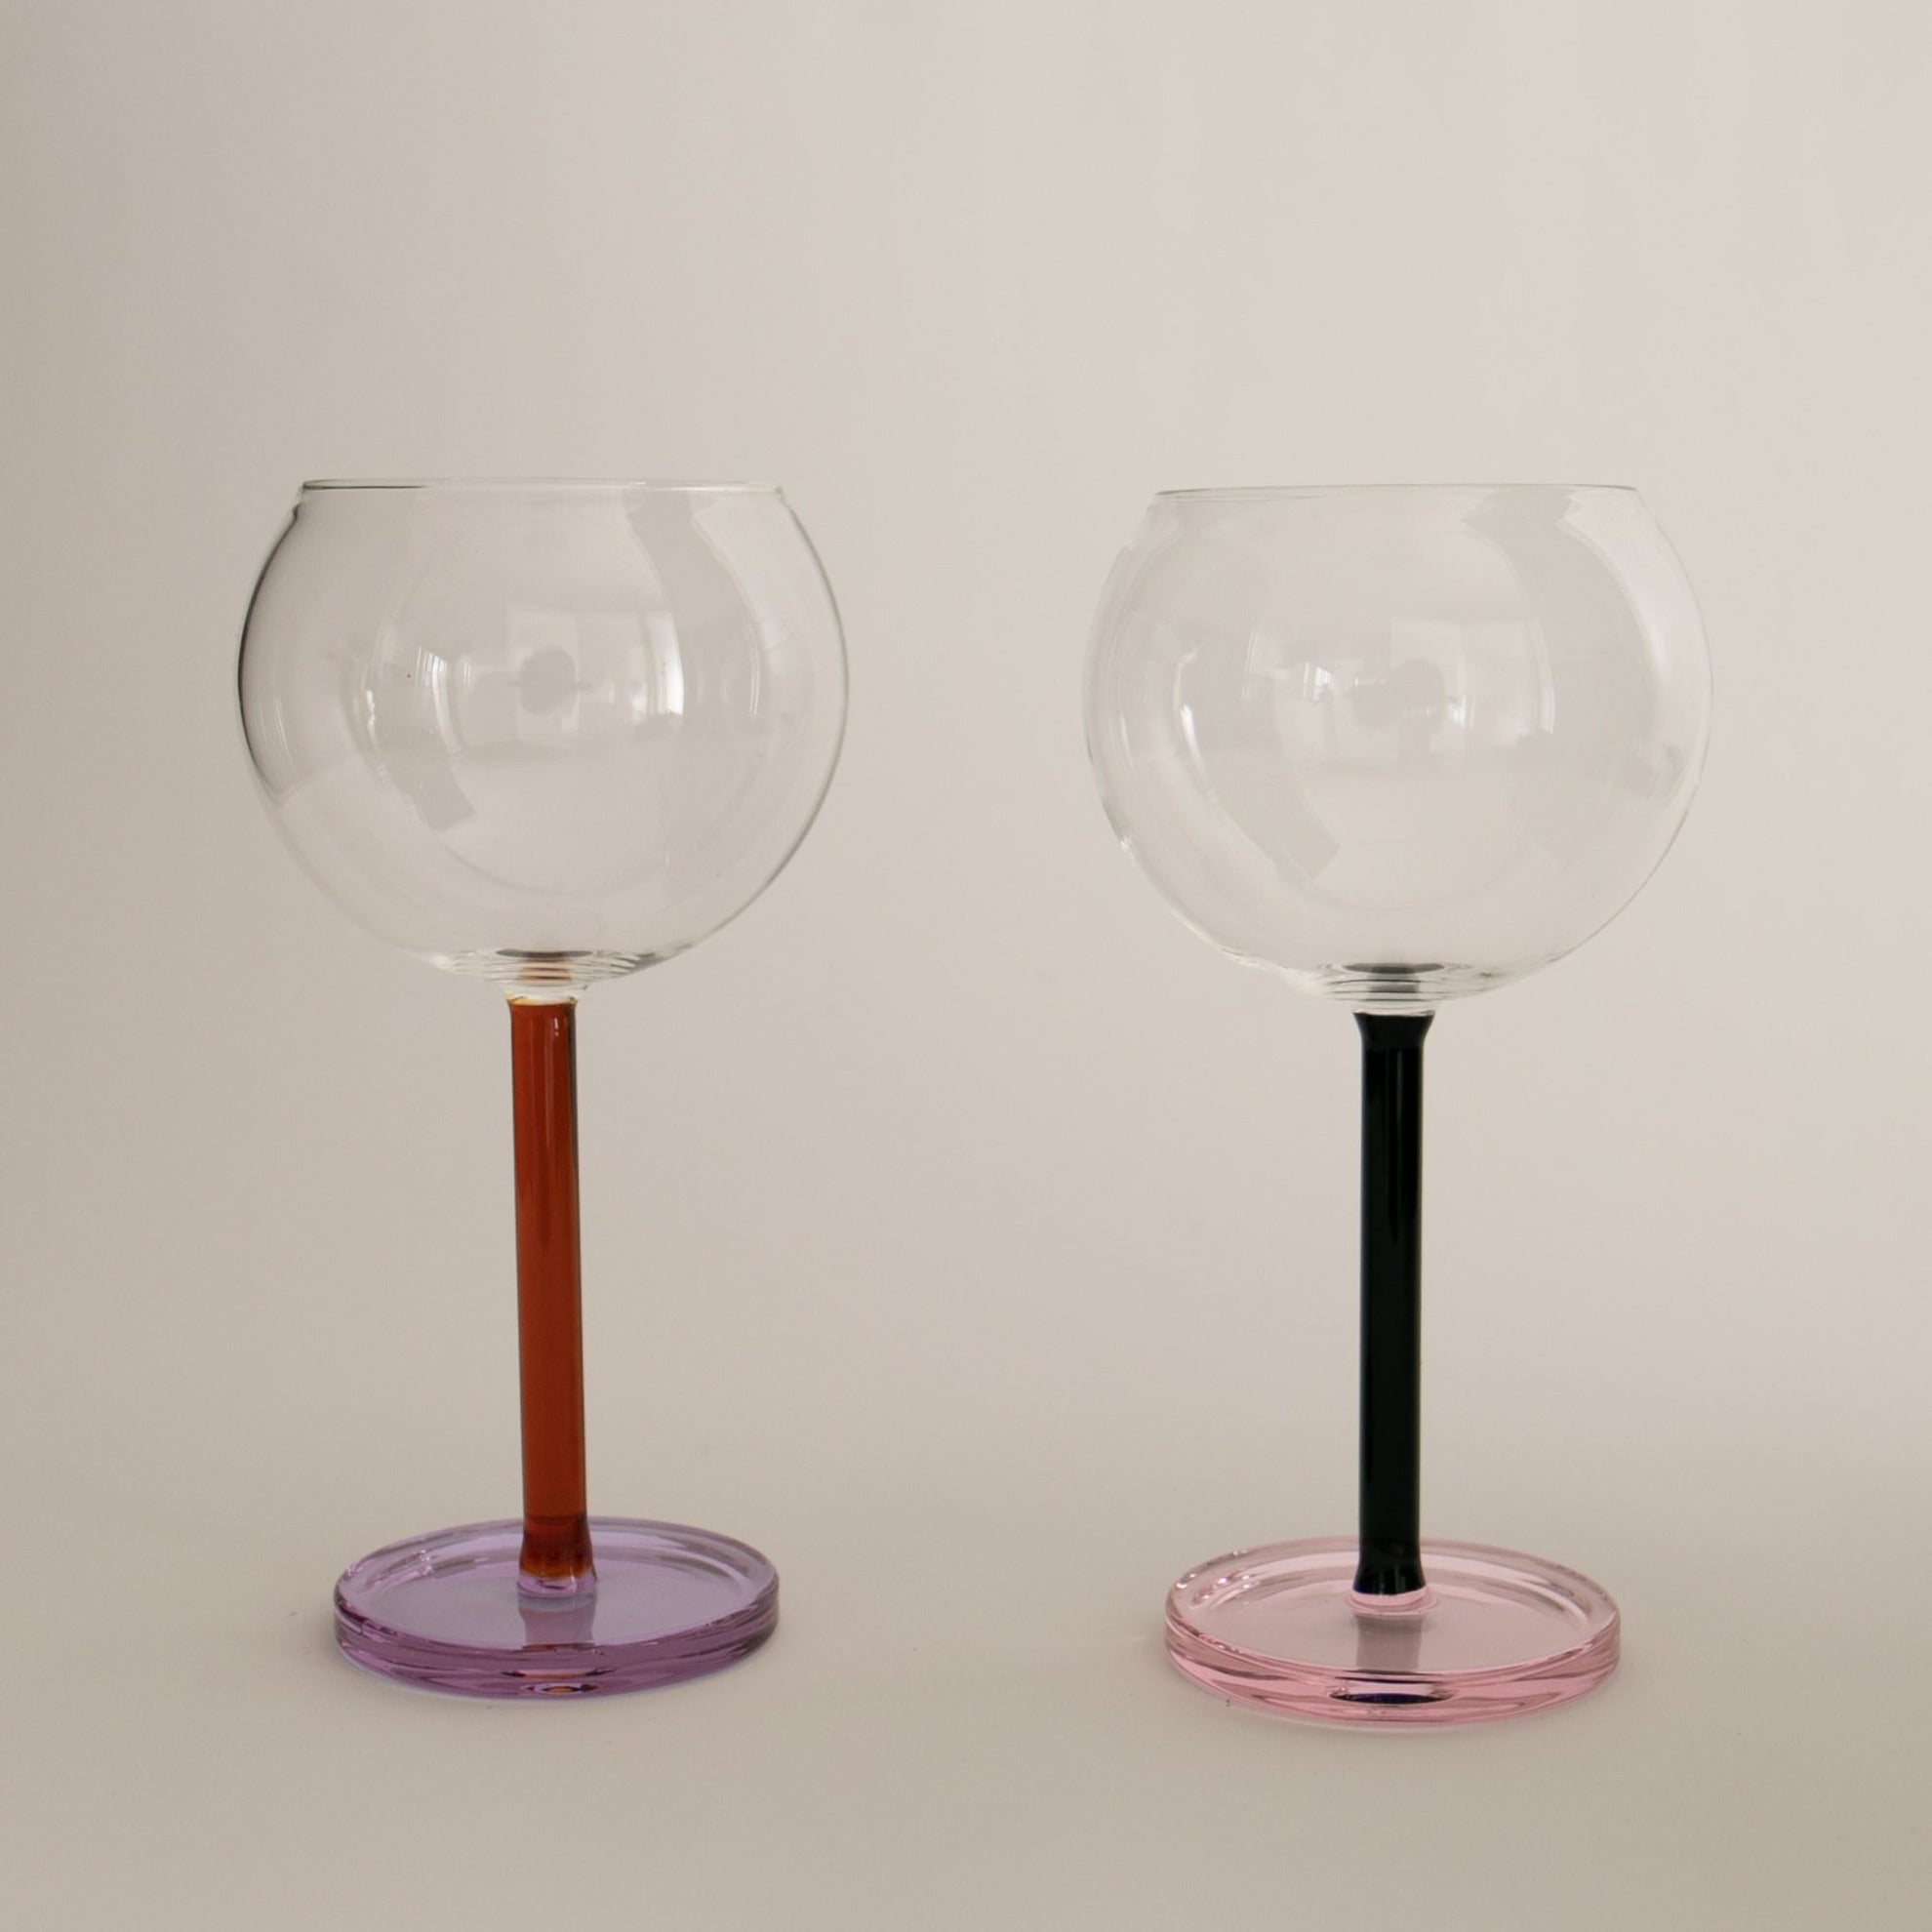 Frances Wine Glass - fferrone fluted wine glass – f f e r r o n e